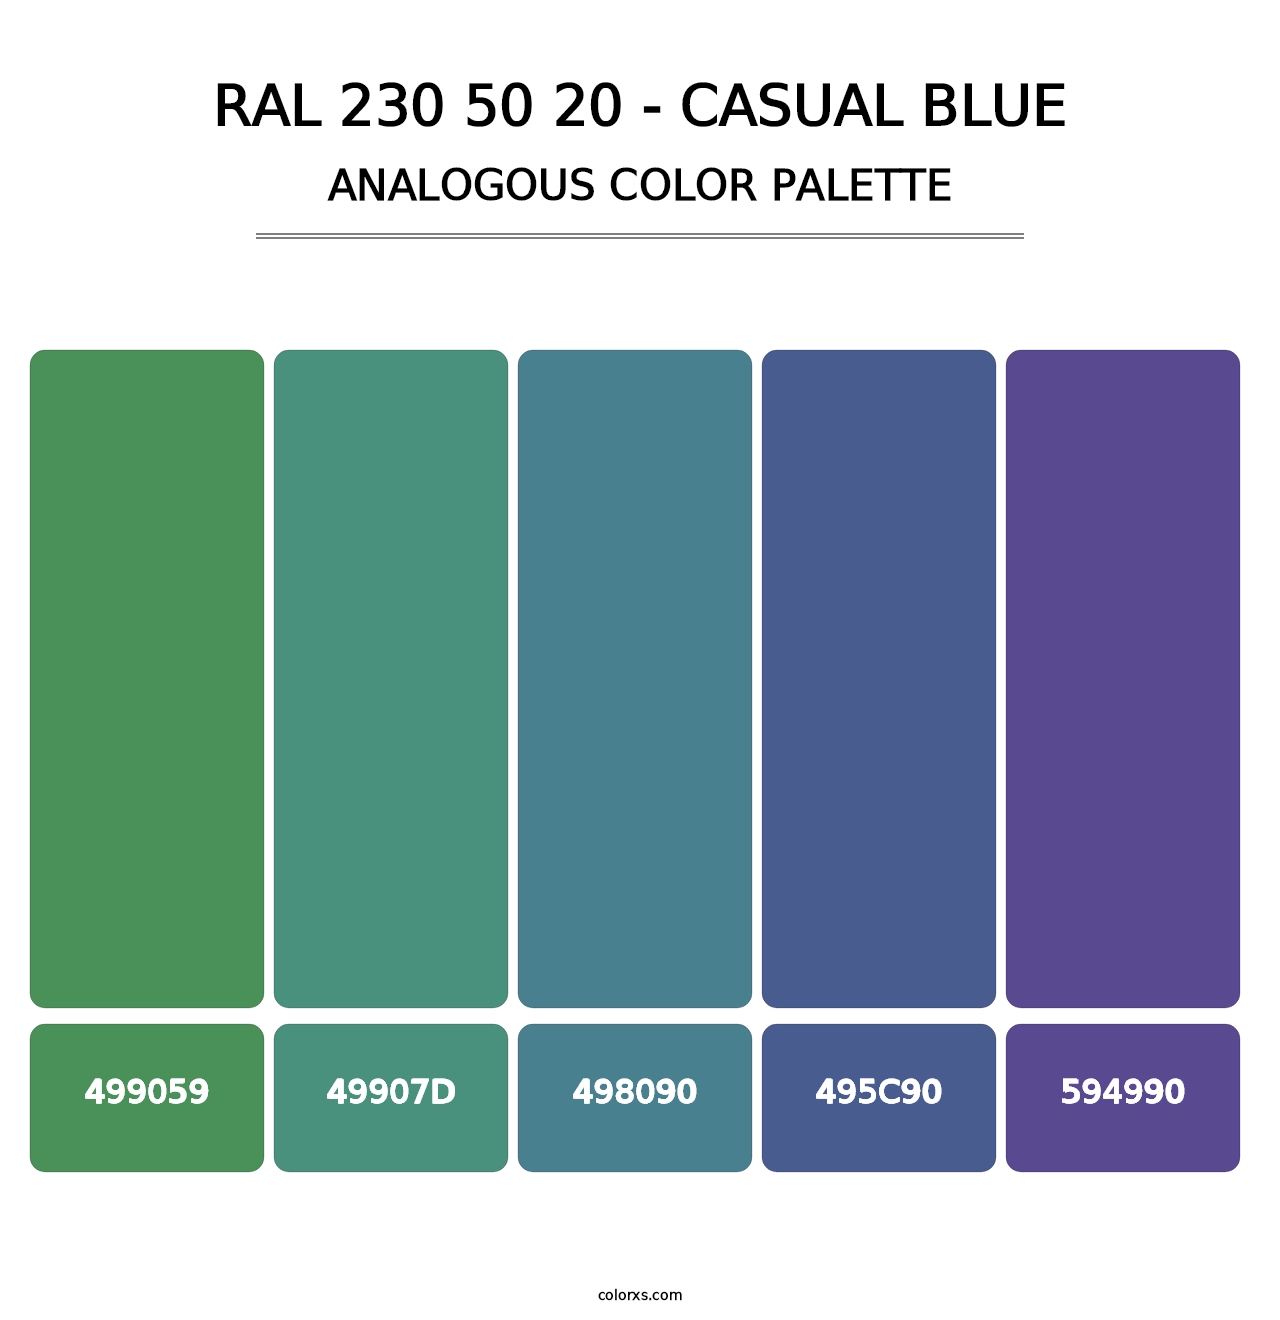 RAL 230 50 20 - Casual Blue - Analogous Color Palette